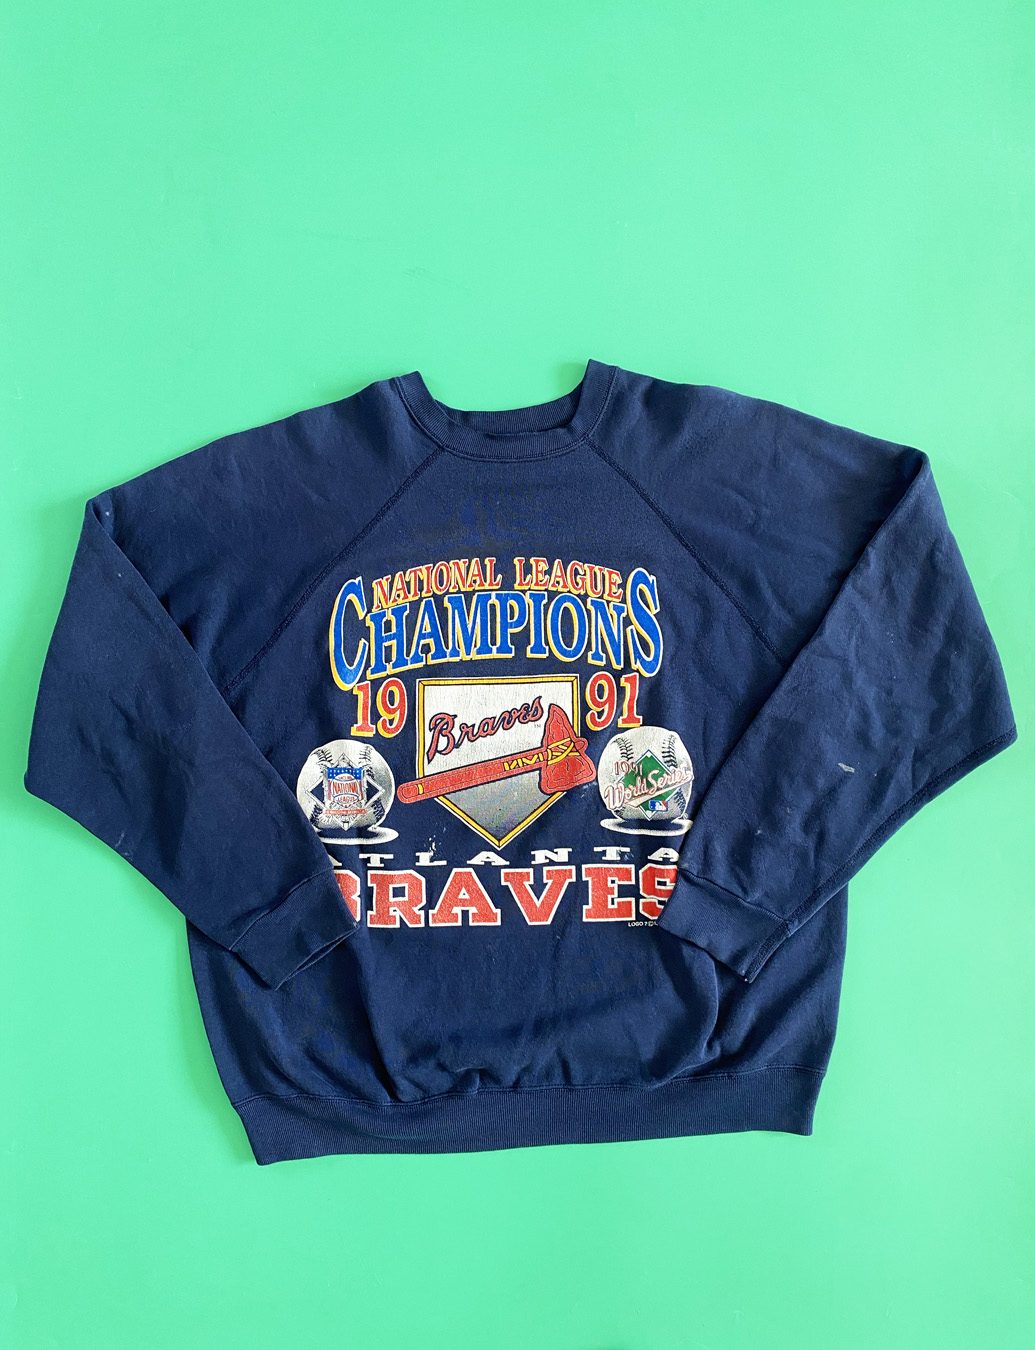 Vintage 1991 Atlanta Braves Tomahawk Champs Tee Shirt, hoodie